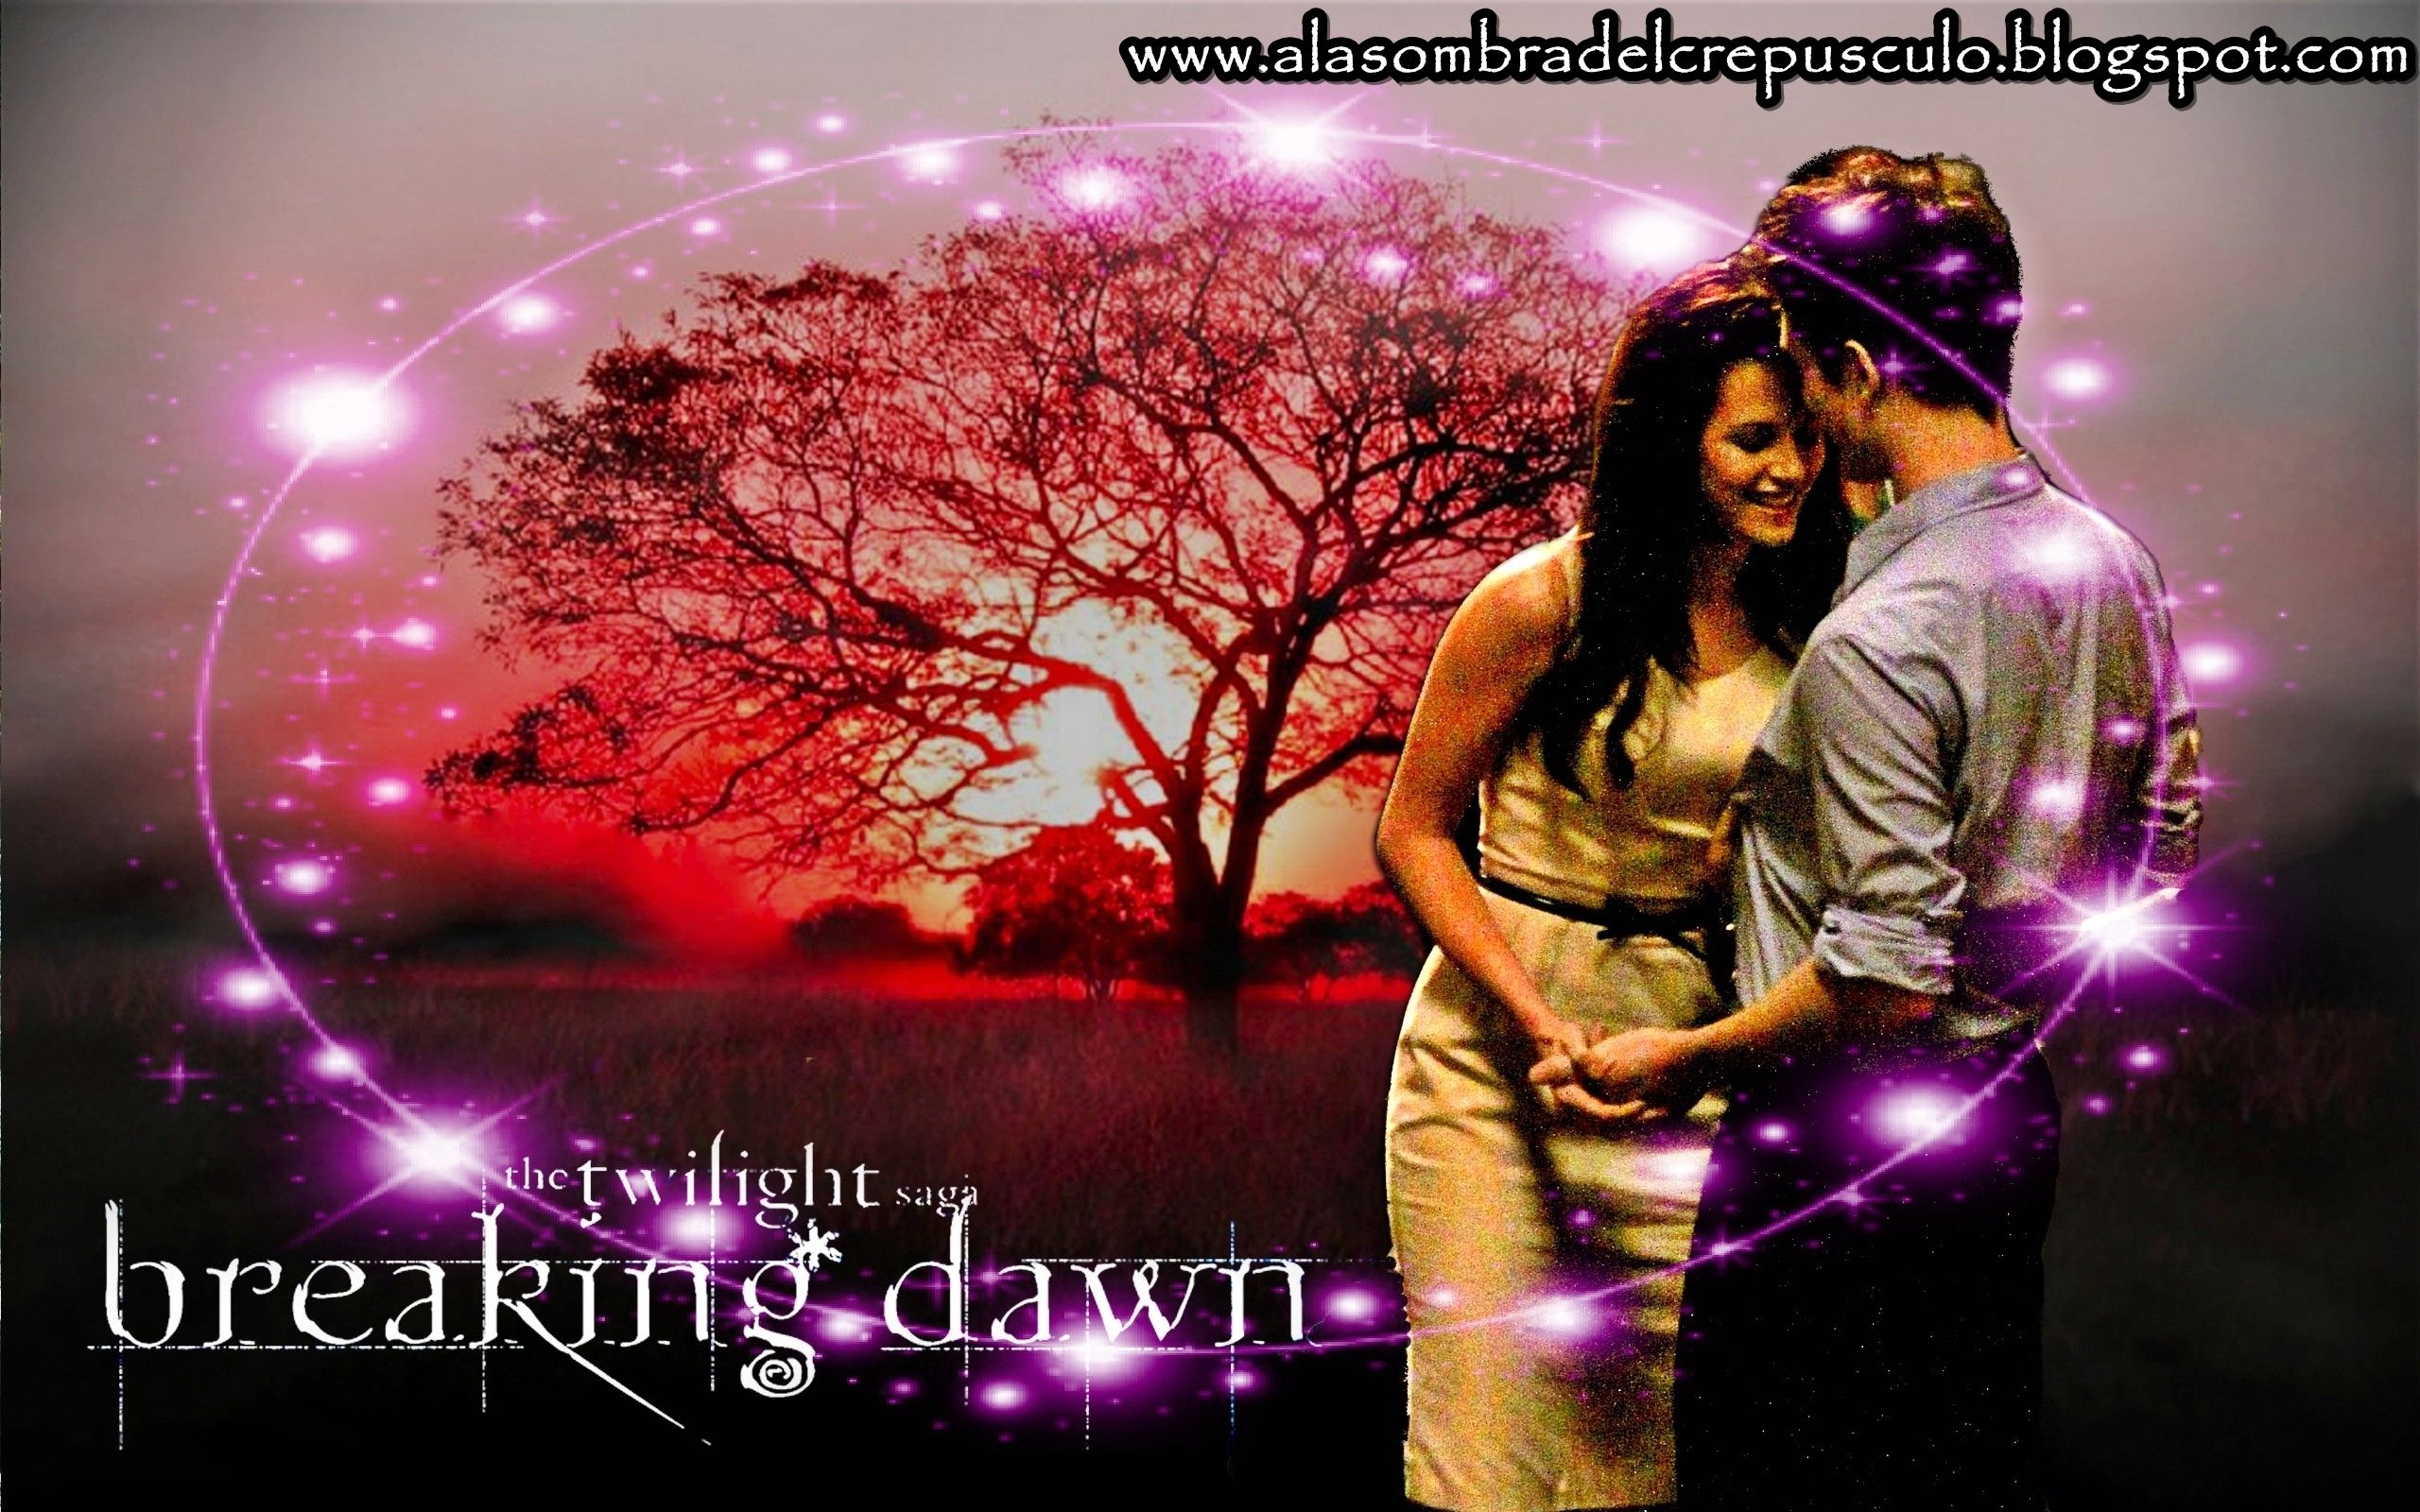 Breaking Dawn (Amanecer) - Twilight Series Wallpaper (17437881 ...